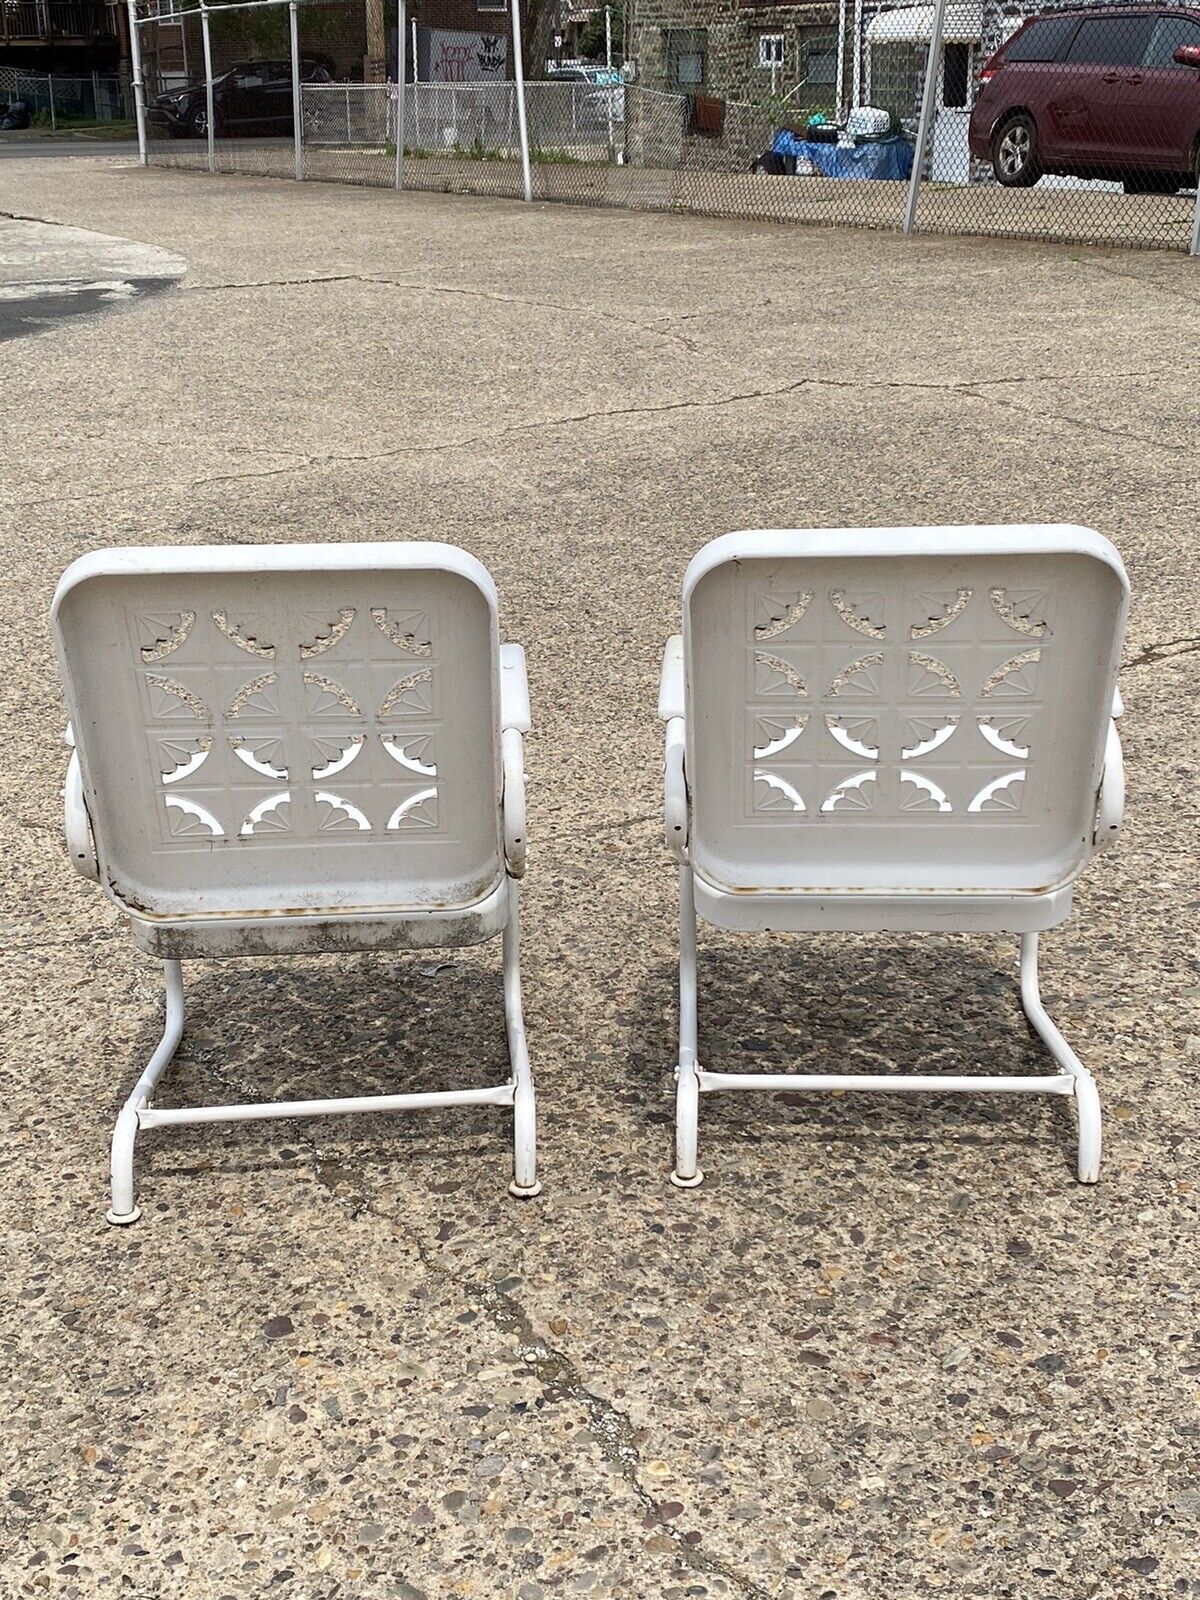 Vintage Starburst Pie Crest Metal Outdoor Patio Springer Lounge Chairs - a Pair